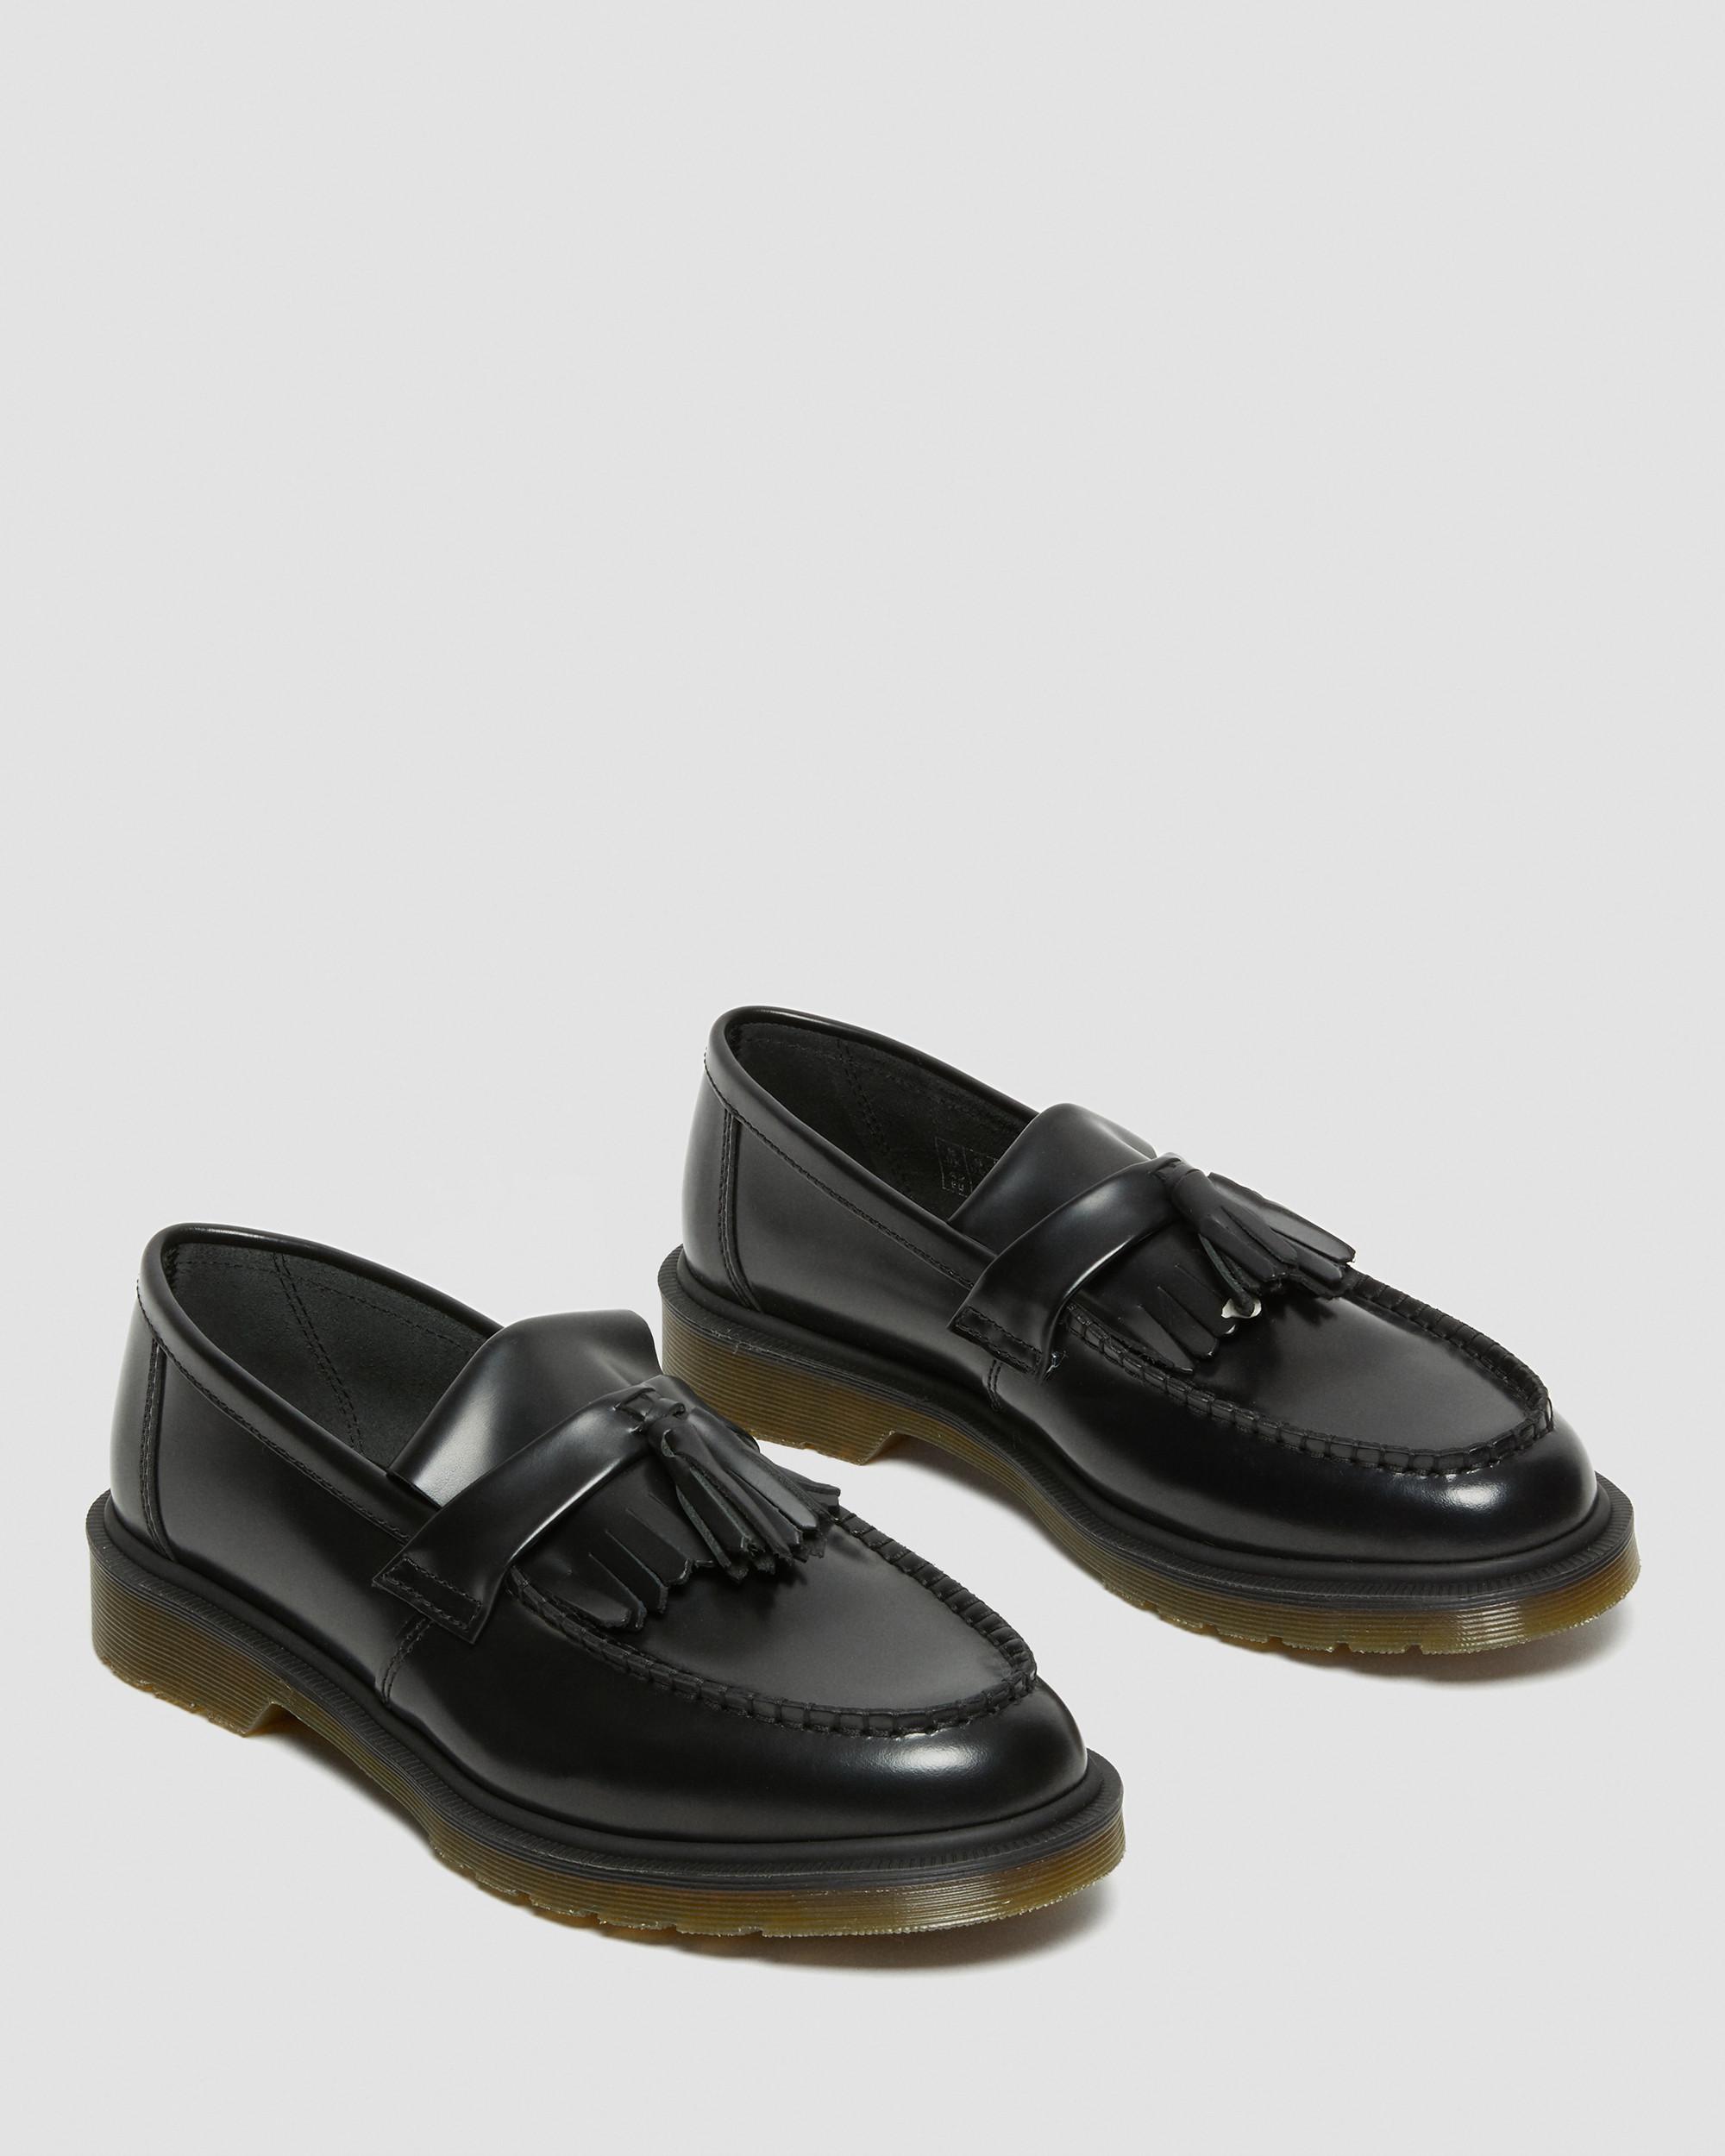 Leather Boots Shoes Black R24369001 Dr.Martens Adrian Tassle Loafer 